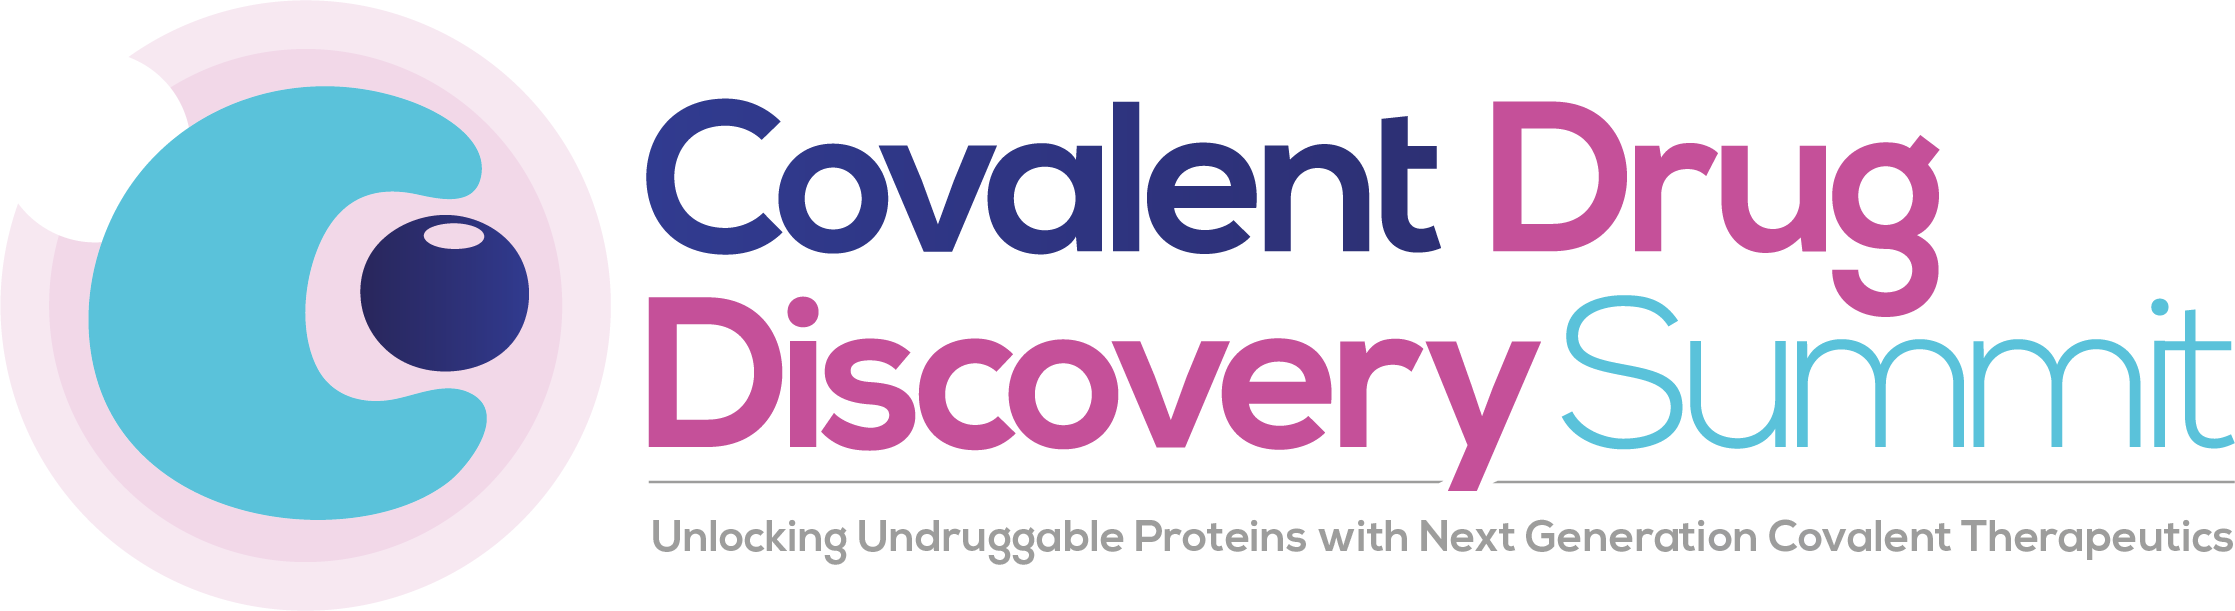 HW230627 34408 Covalent Drug Discovery Summit logo